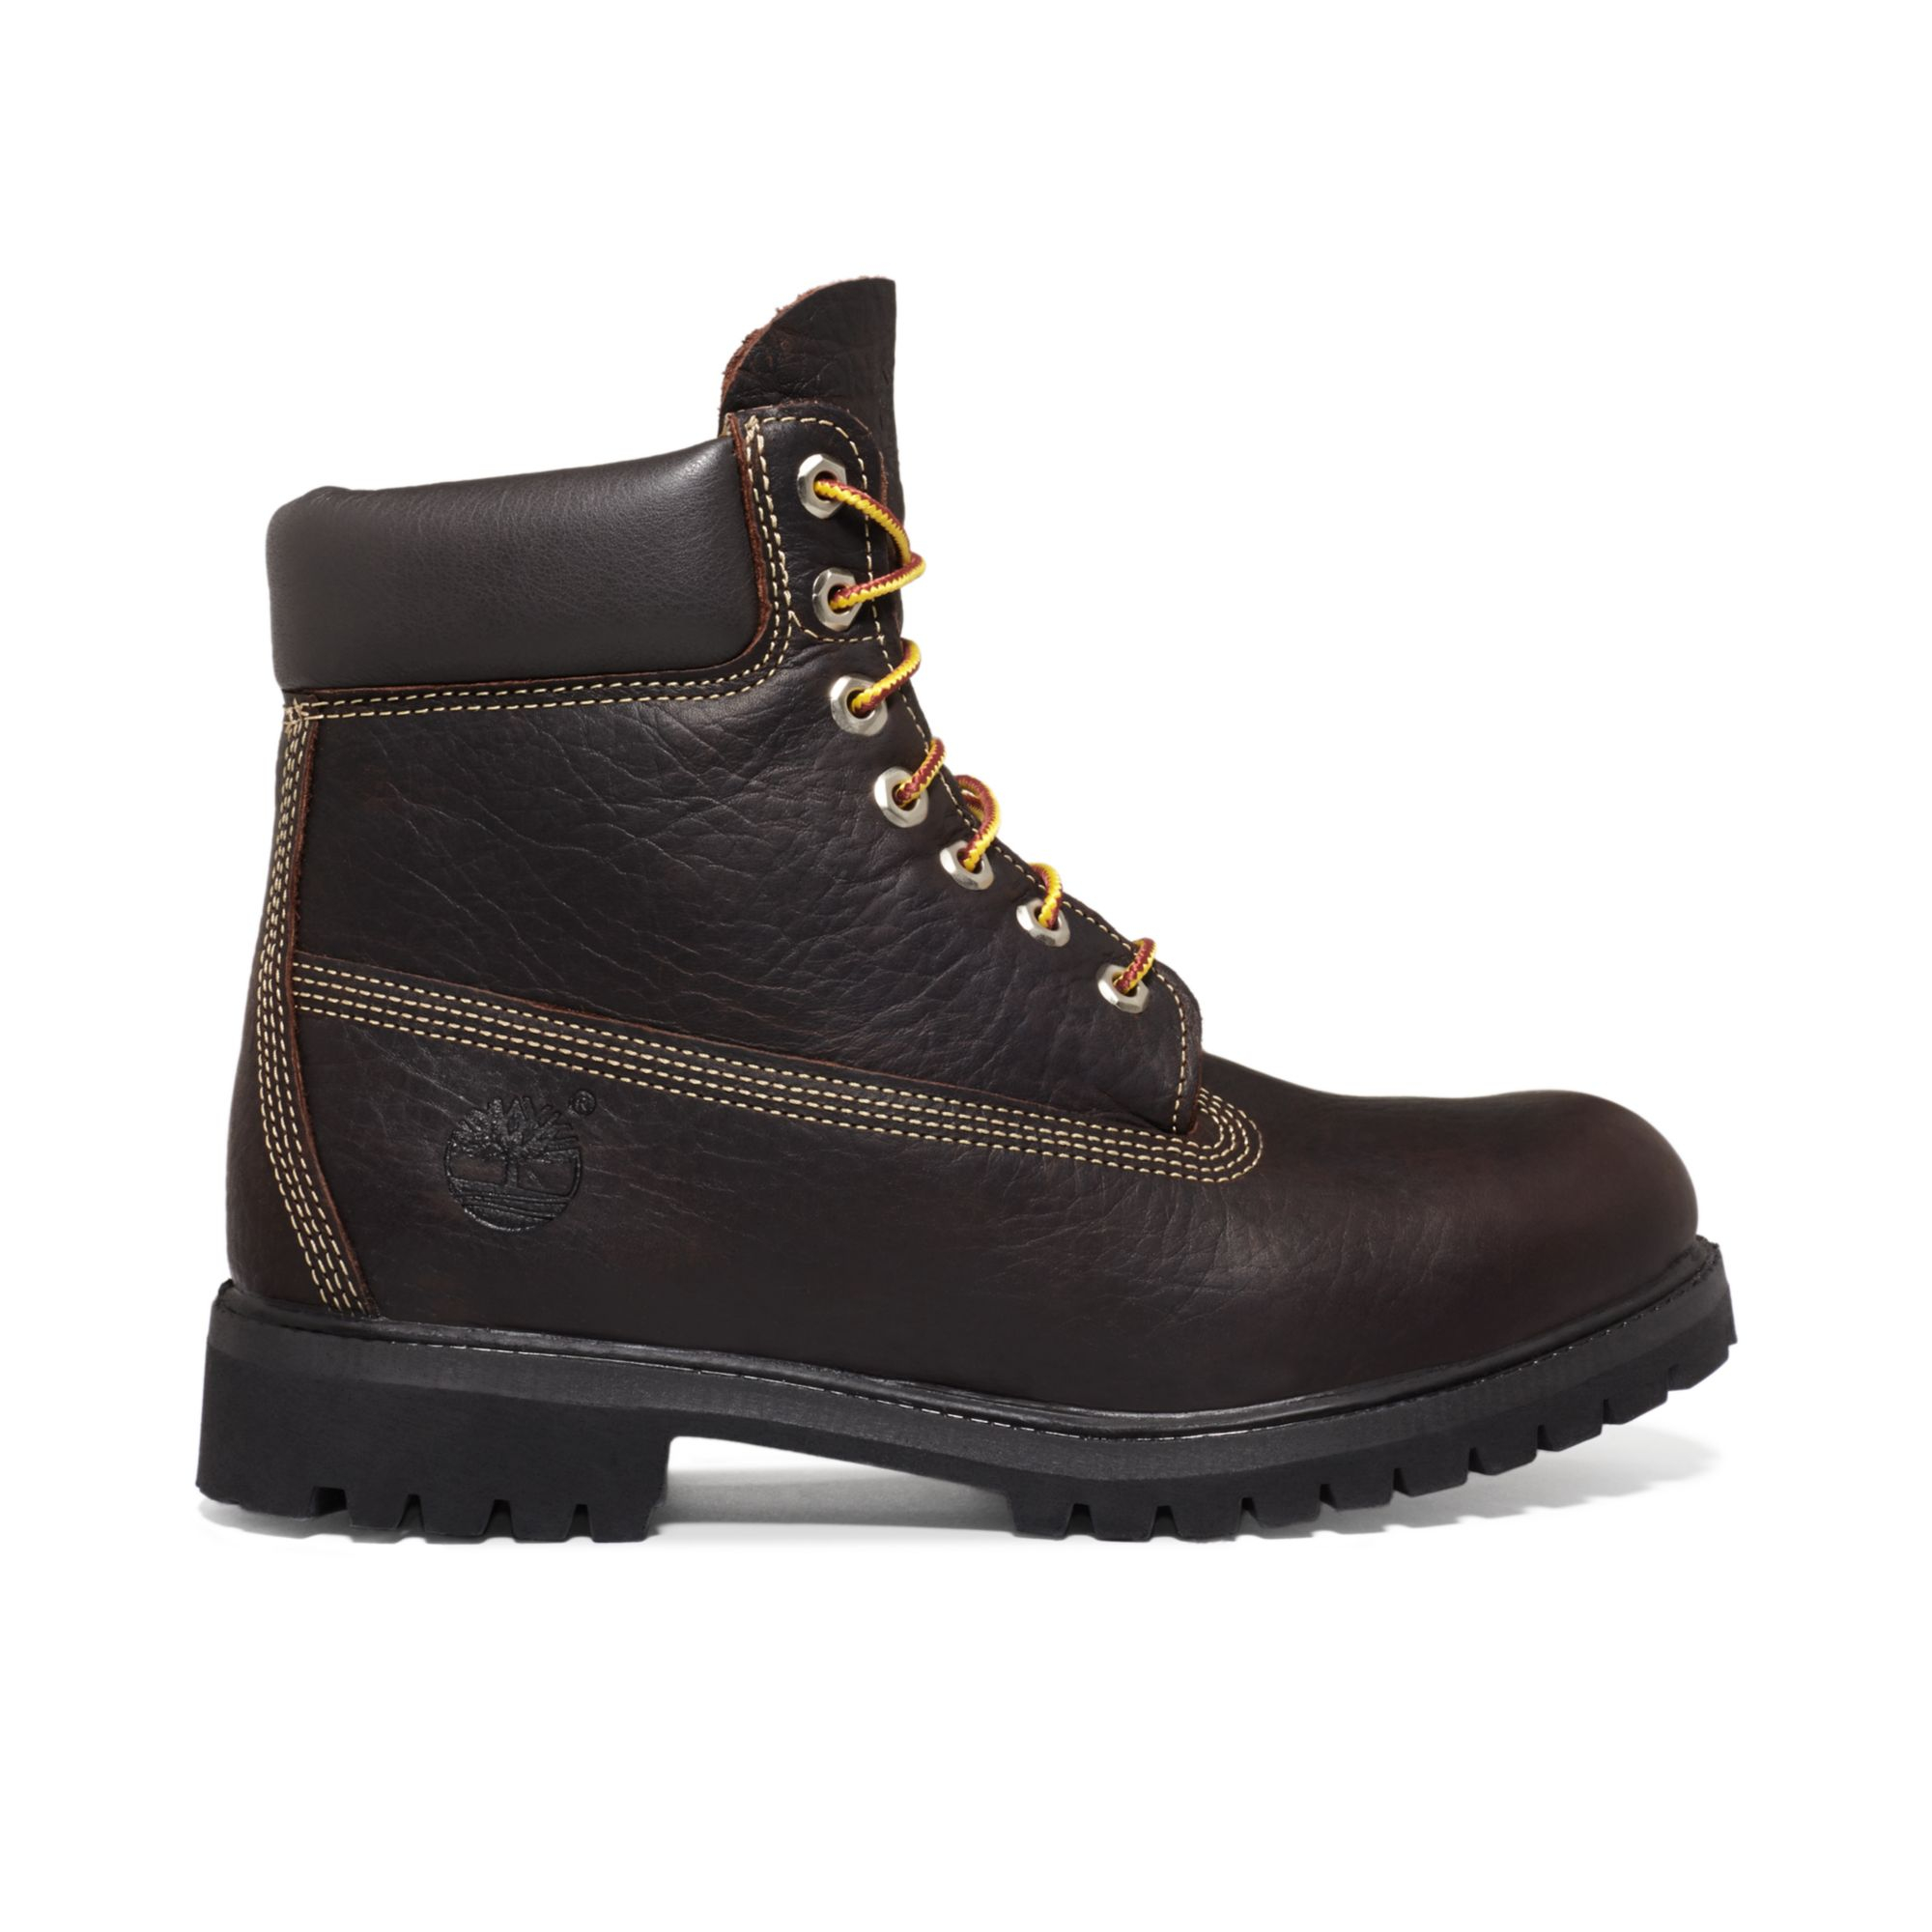 Timberland 6 Premium Waterproof Boots in Brown for Men - Lyst